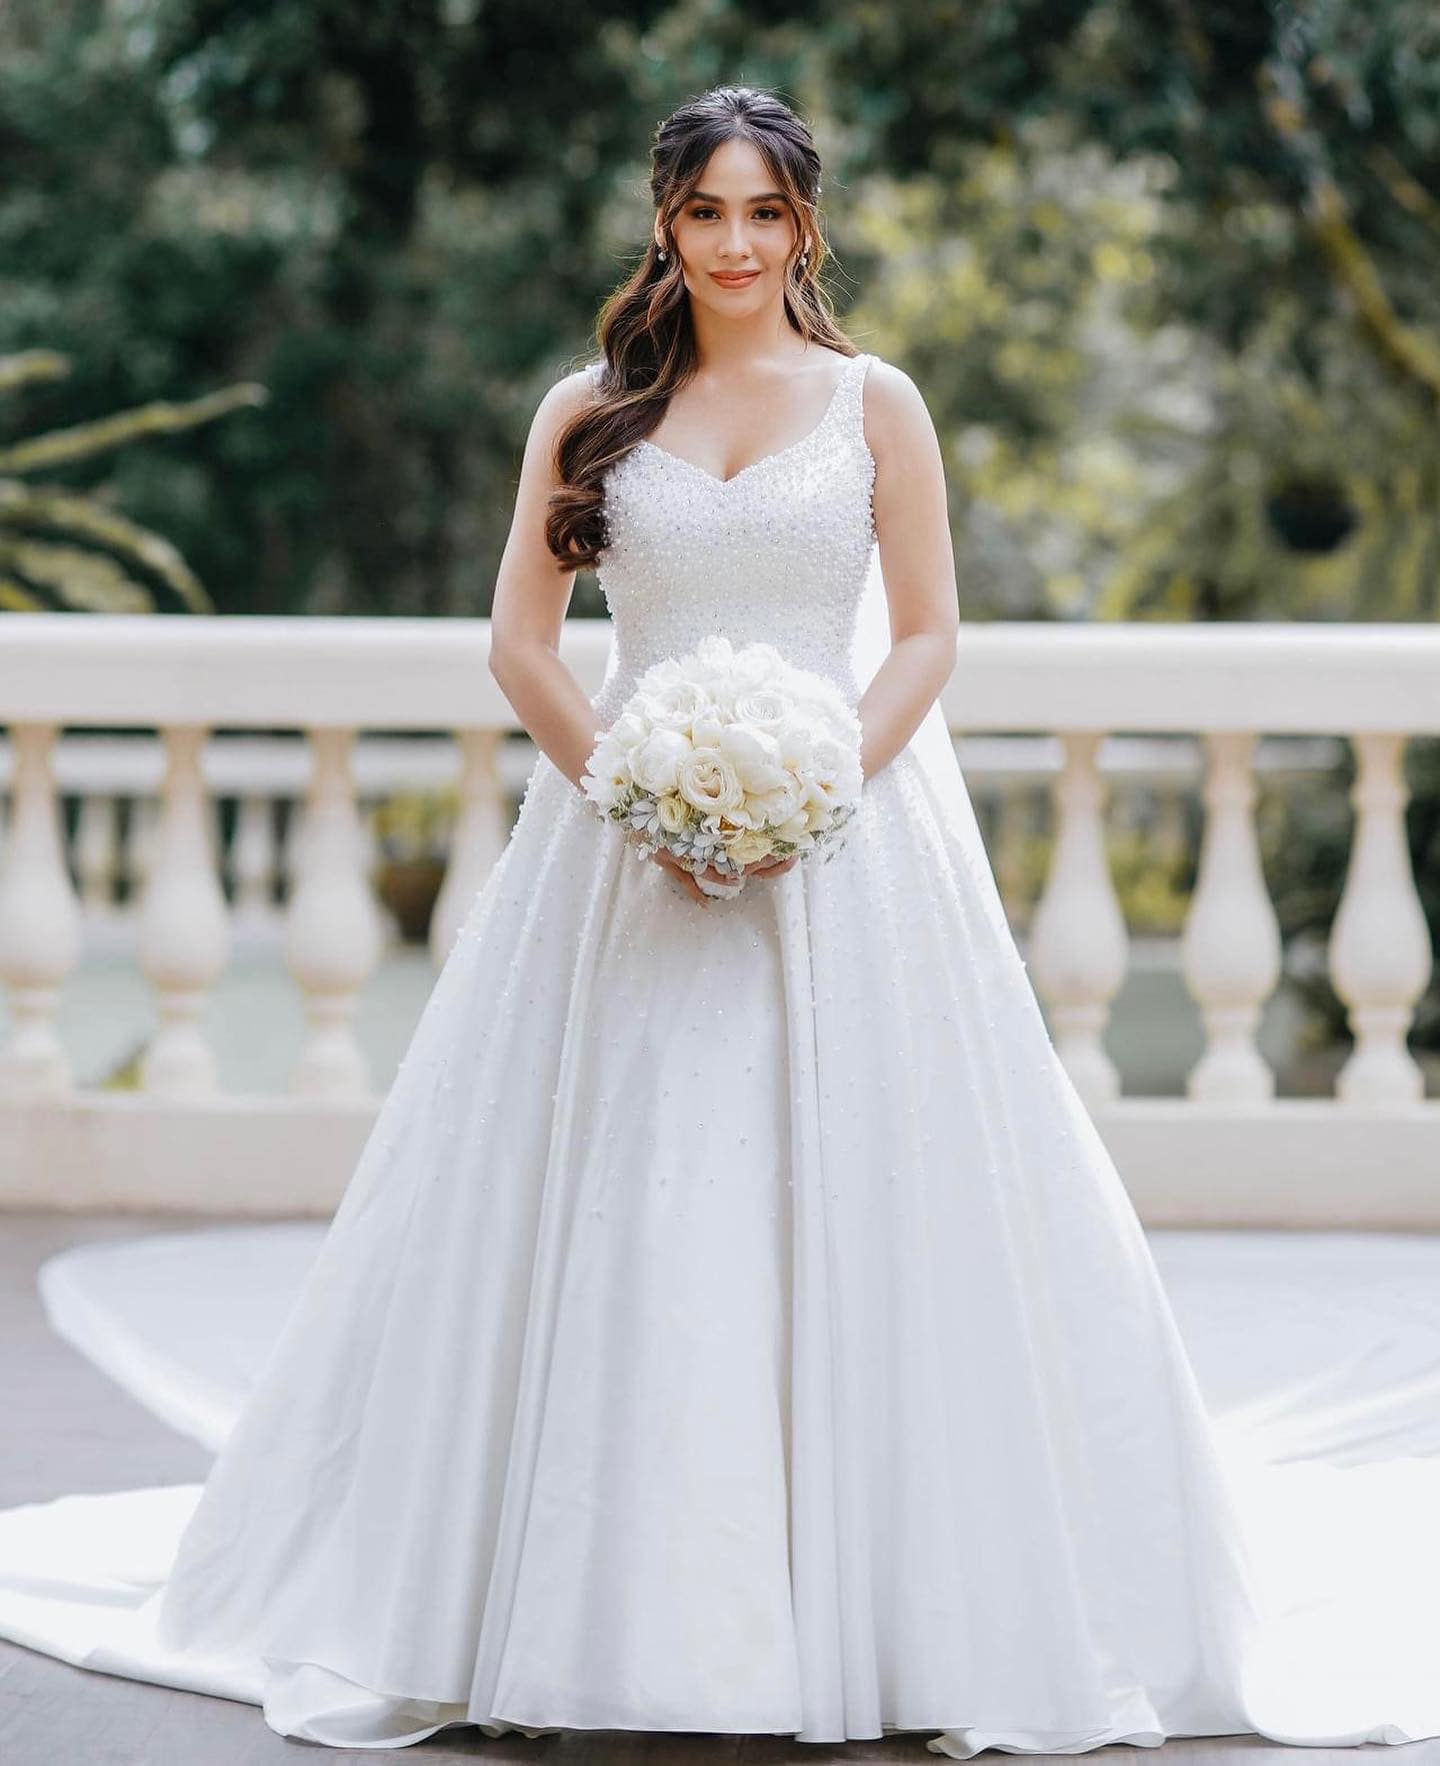 Aoui Regala Atelier Filipina Wedding Dress Designer Featured in British Vogue and Tatler UK- Empress Schuck wedding gown